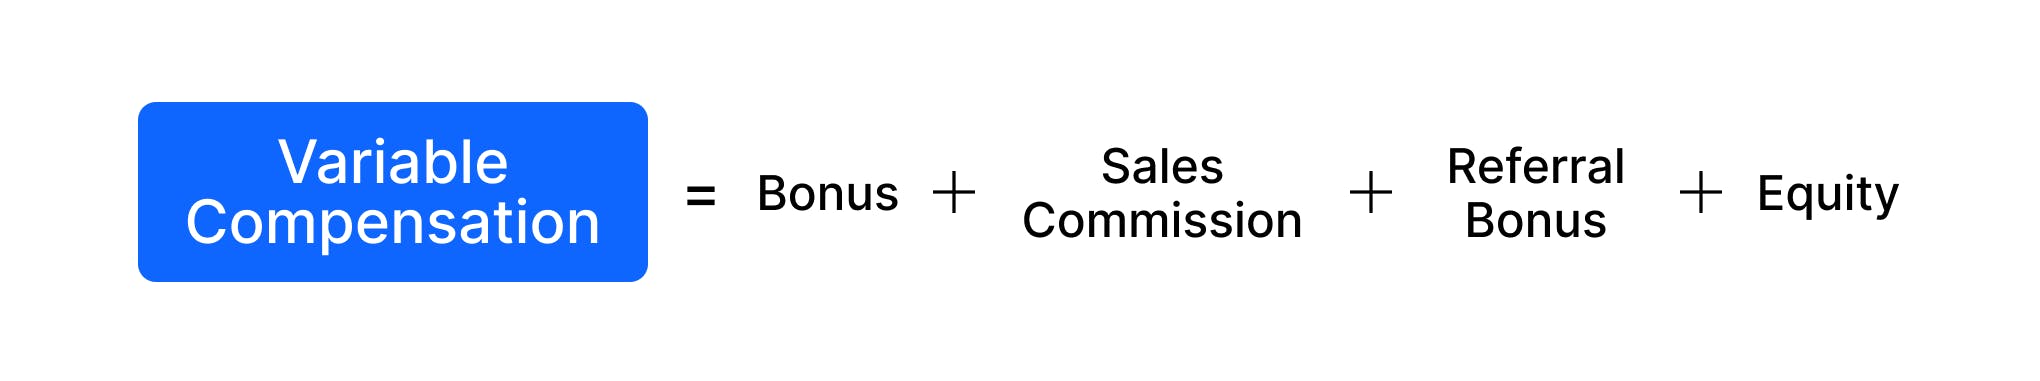 Variable compensation = bonus + sales commission + referral bonus + equity